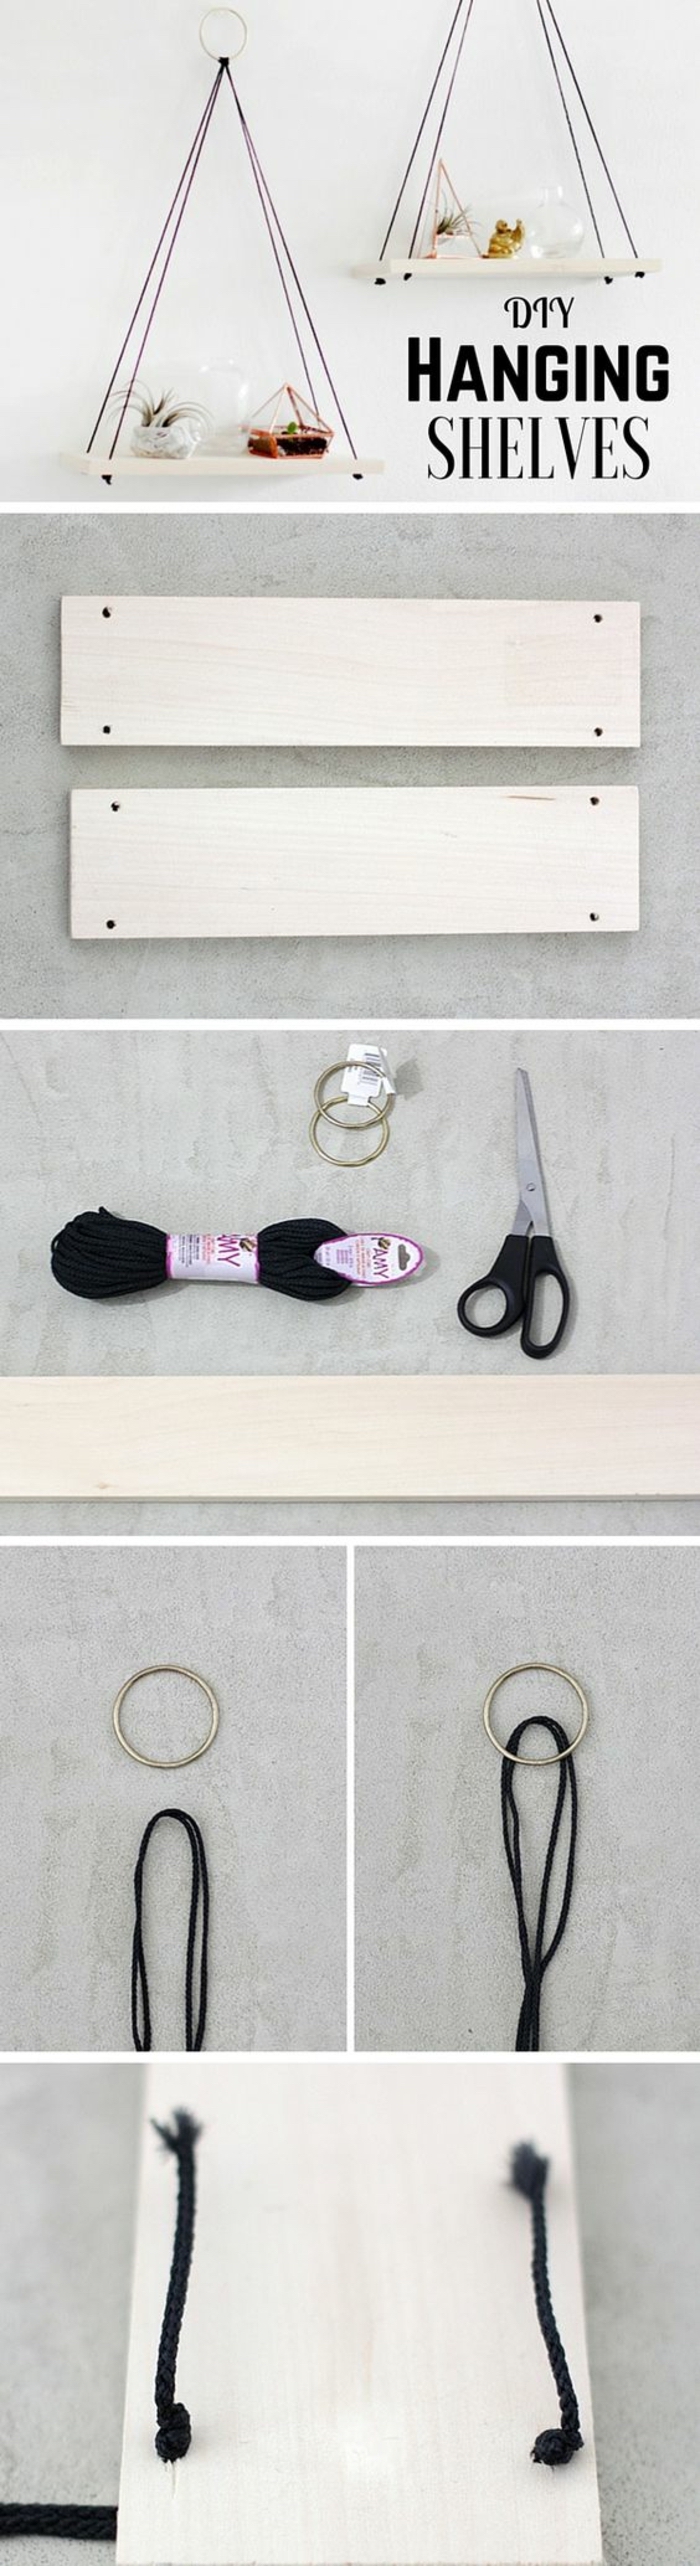 hanging shelves, black yarn, wooden boards, diys for girls, step by step tutorial